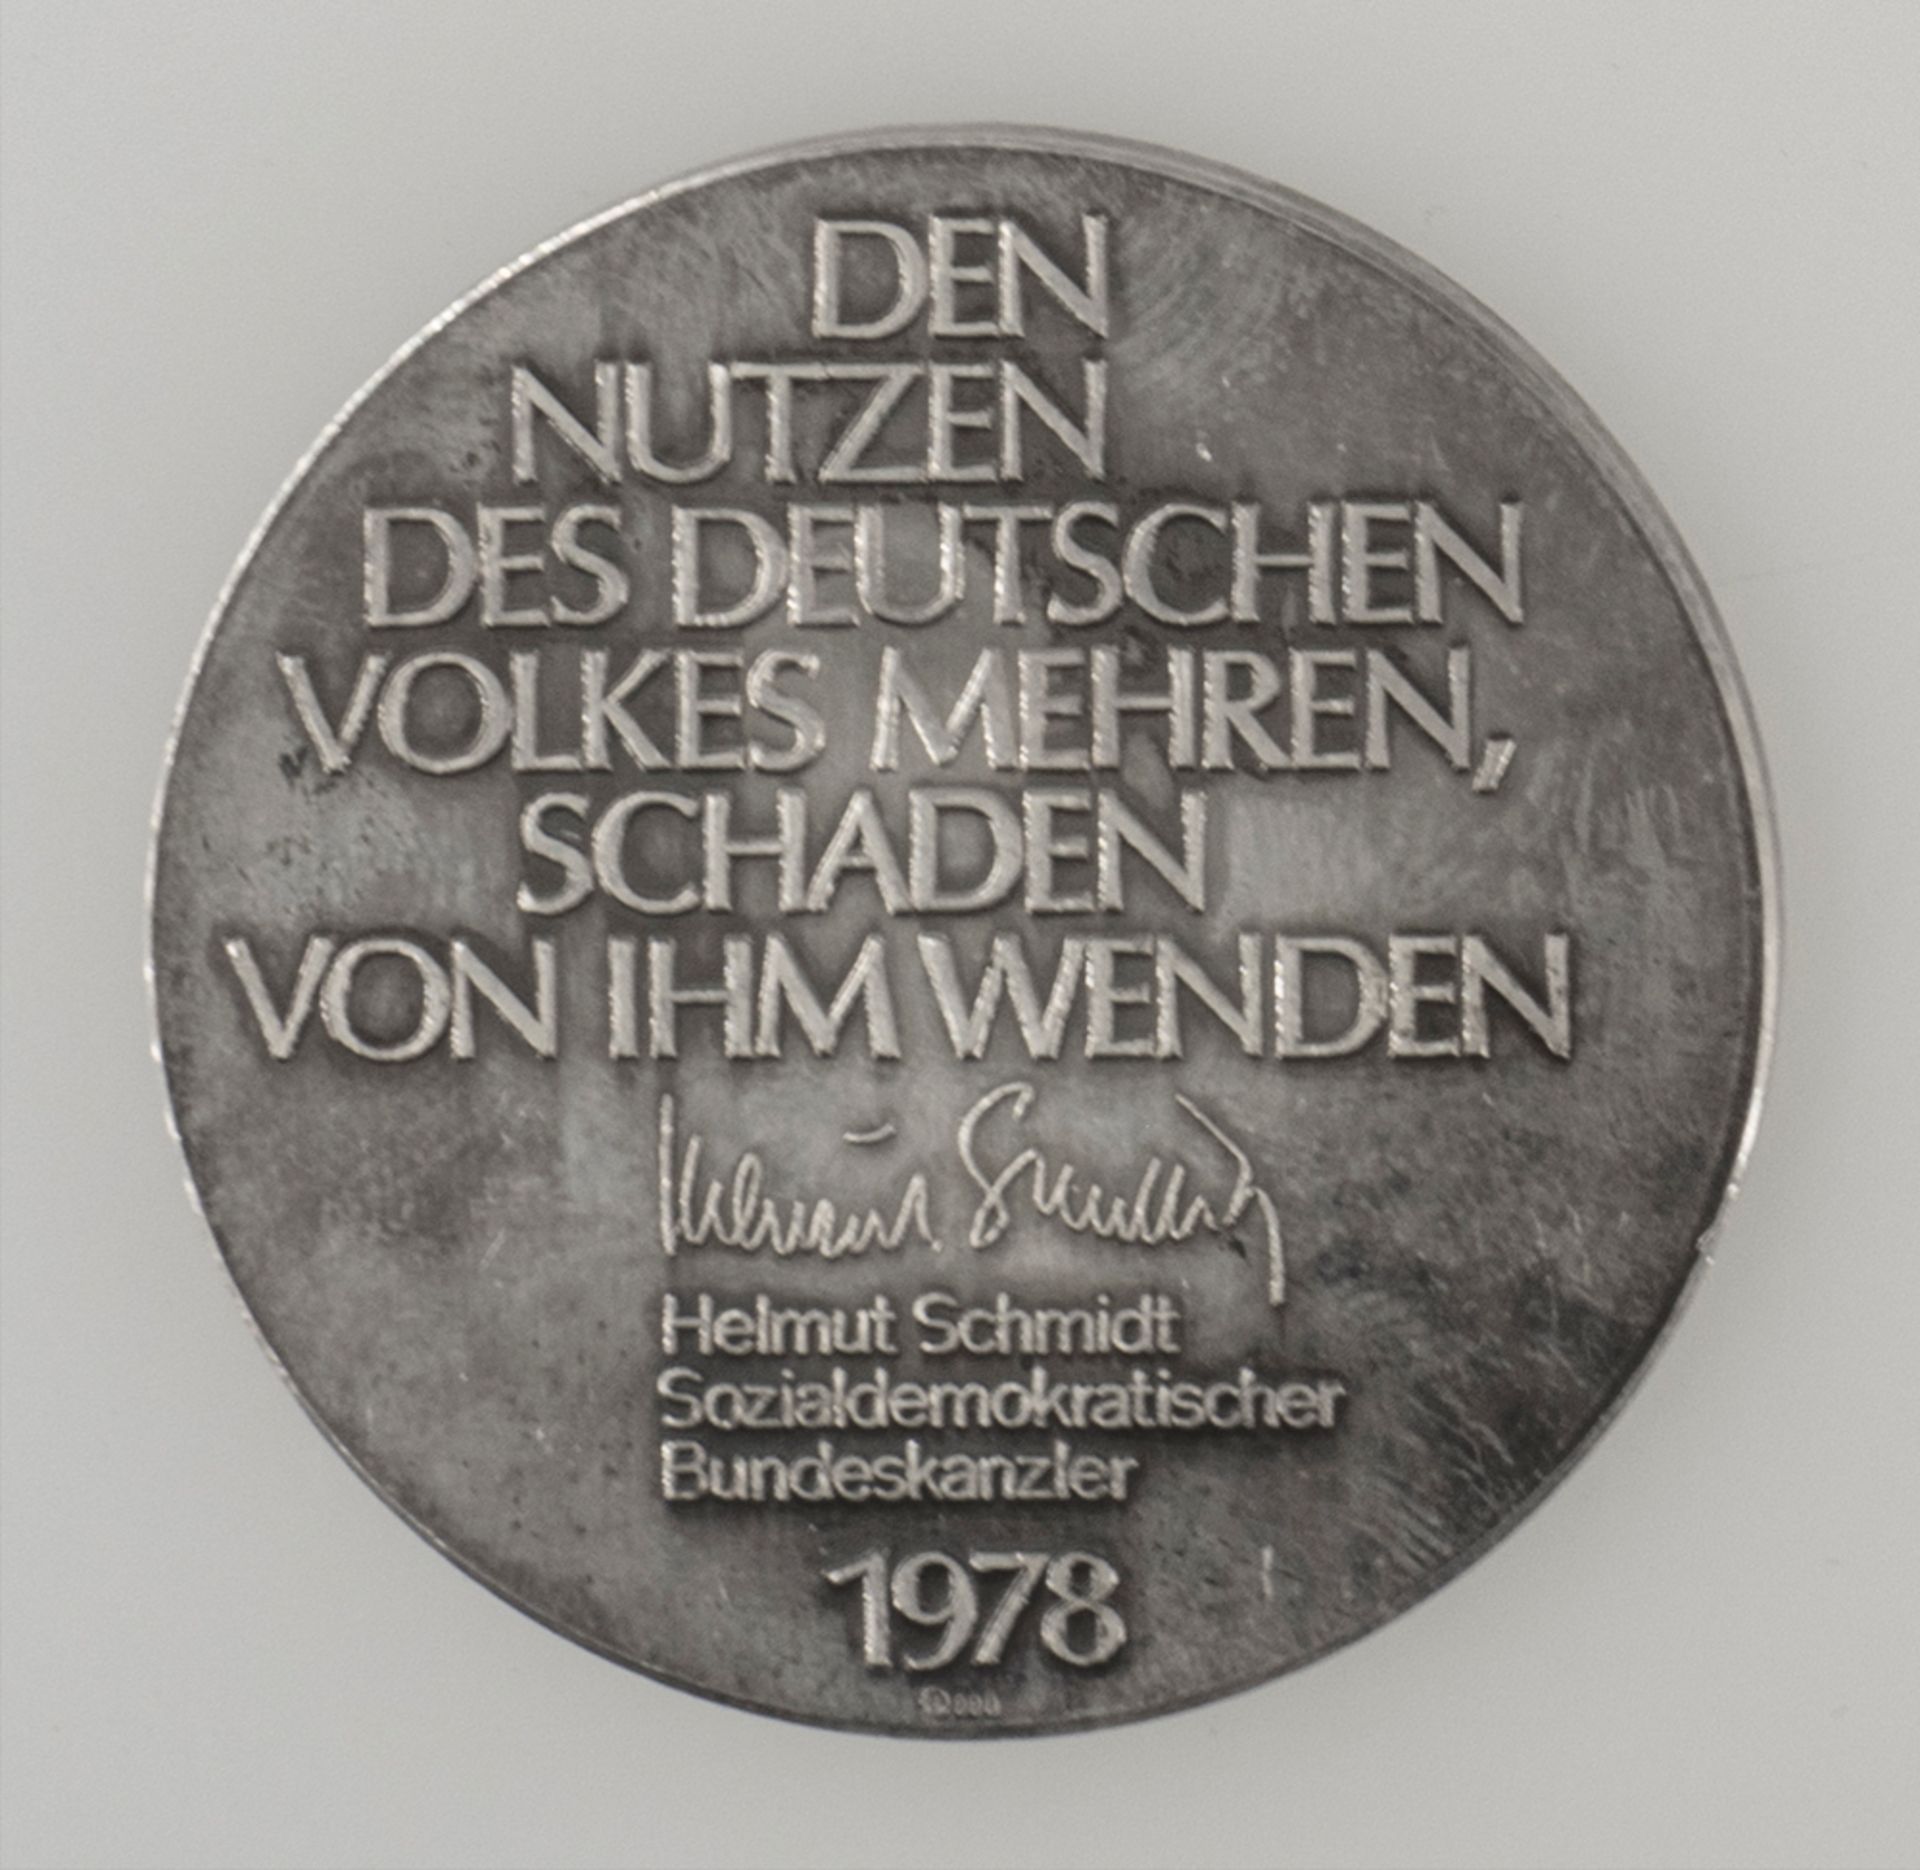 Silber - Medaille "Helmut Schmidt". Silber 999. Durchmesser: ca. 50 mm. - Image 2 of 2